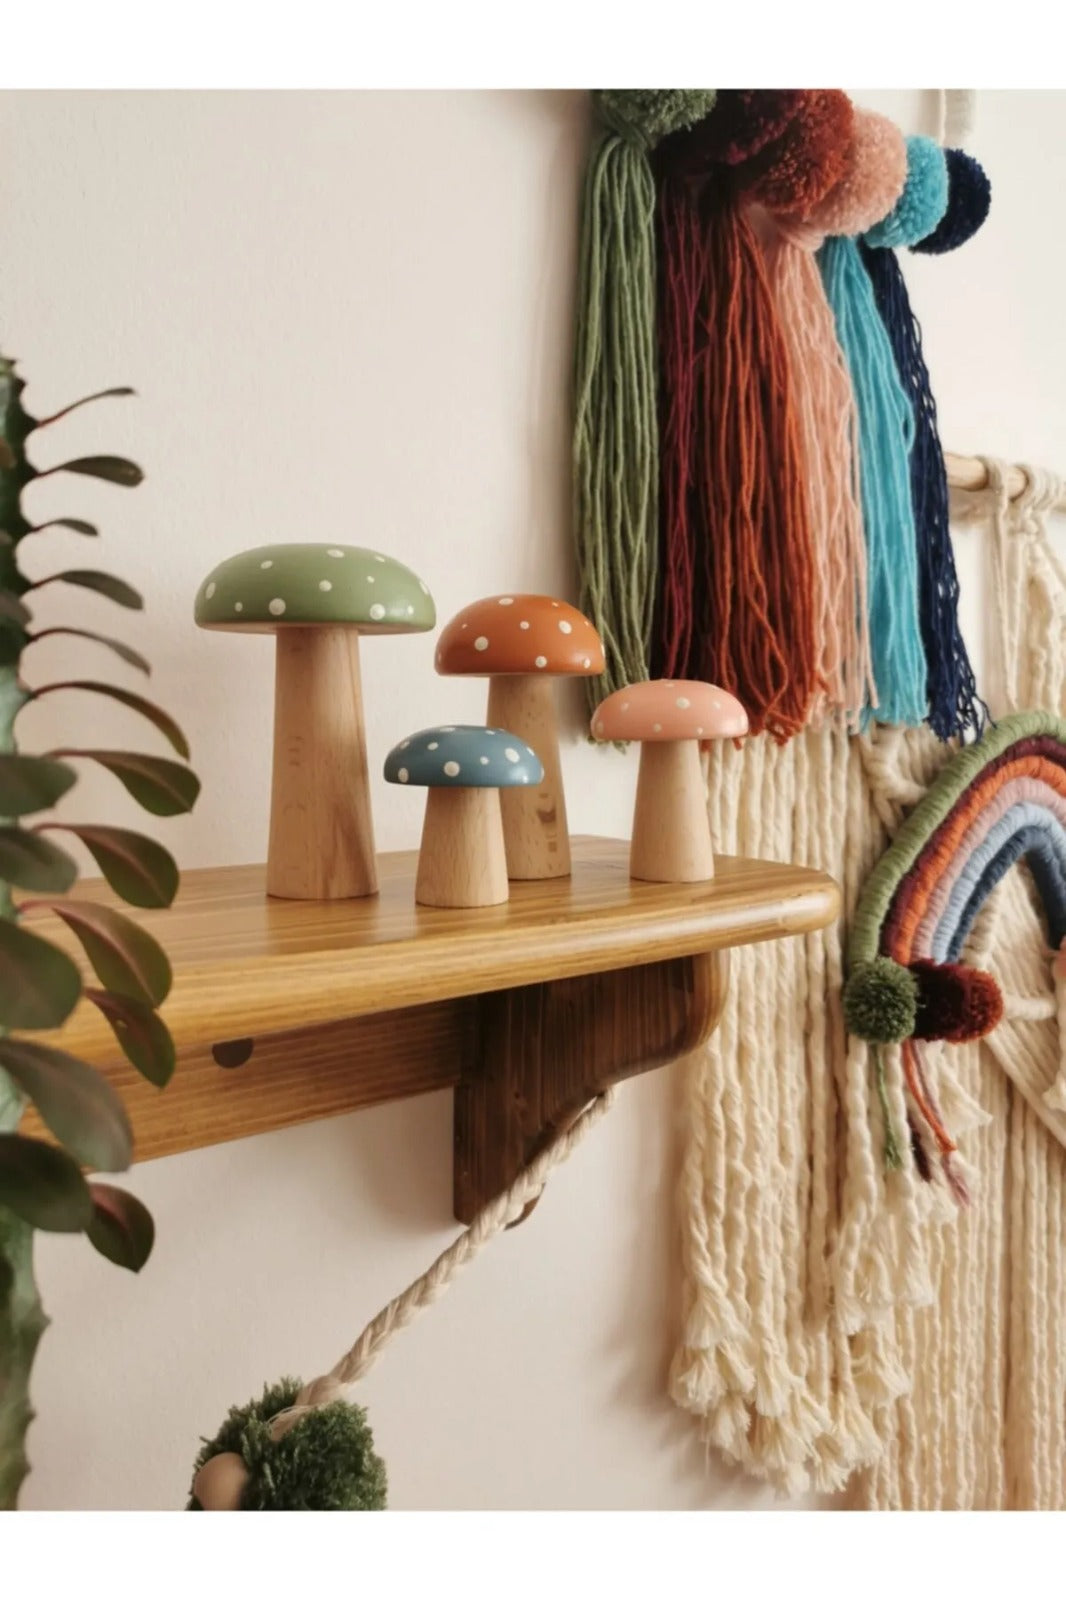 Wooden Soft Mushroom Toy